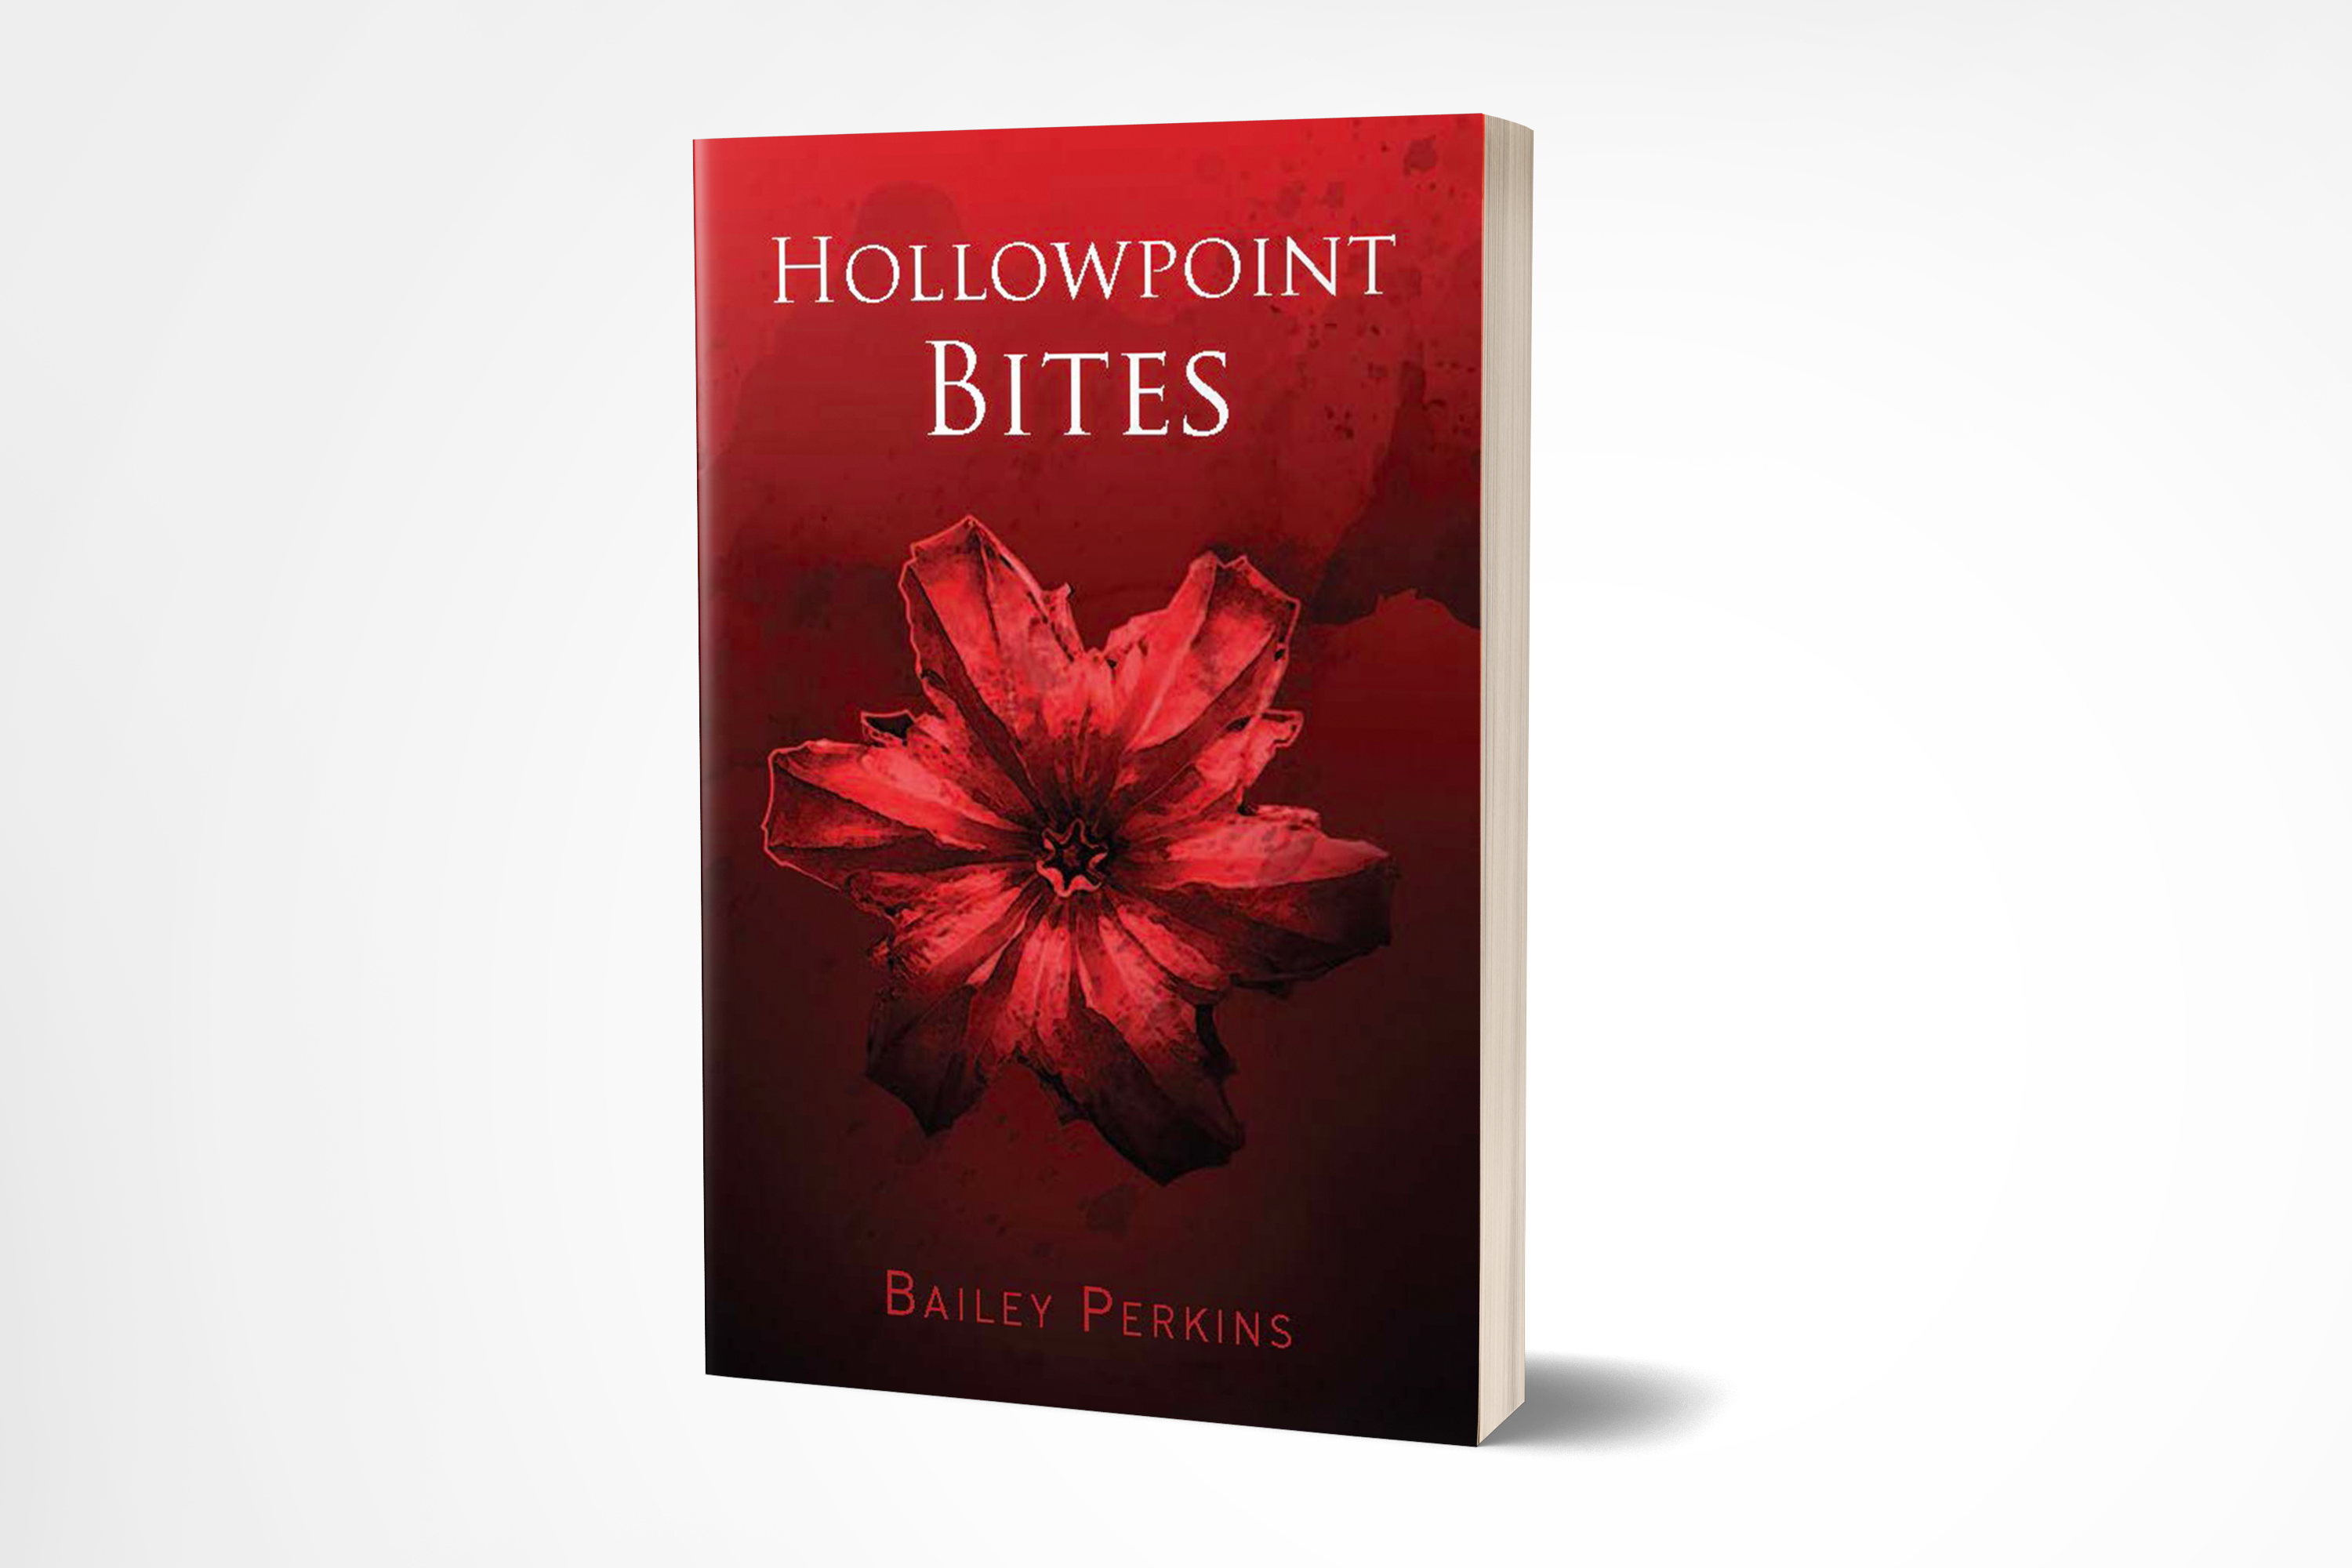 Hollowpoint Bites